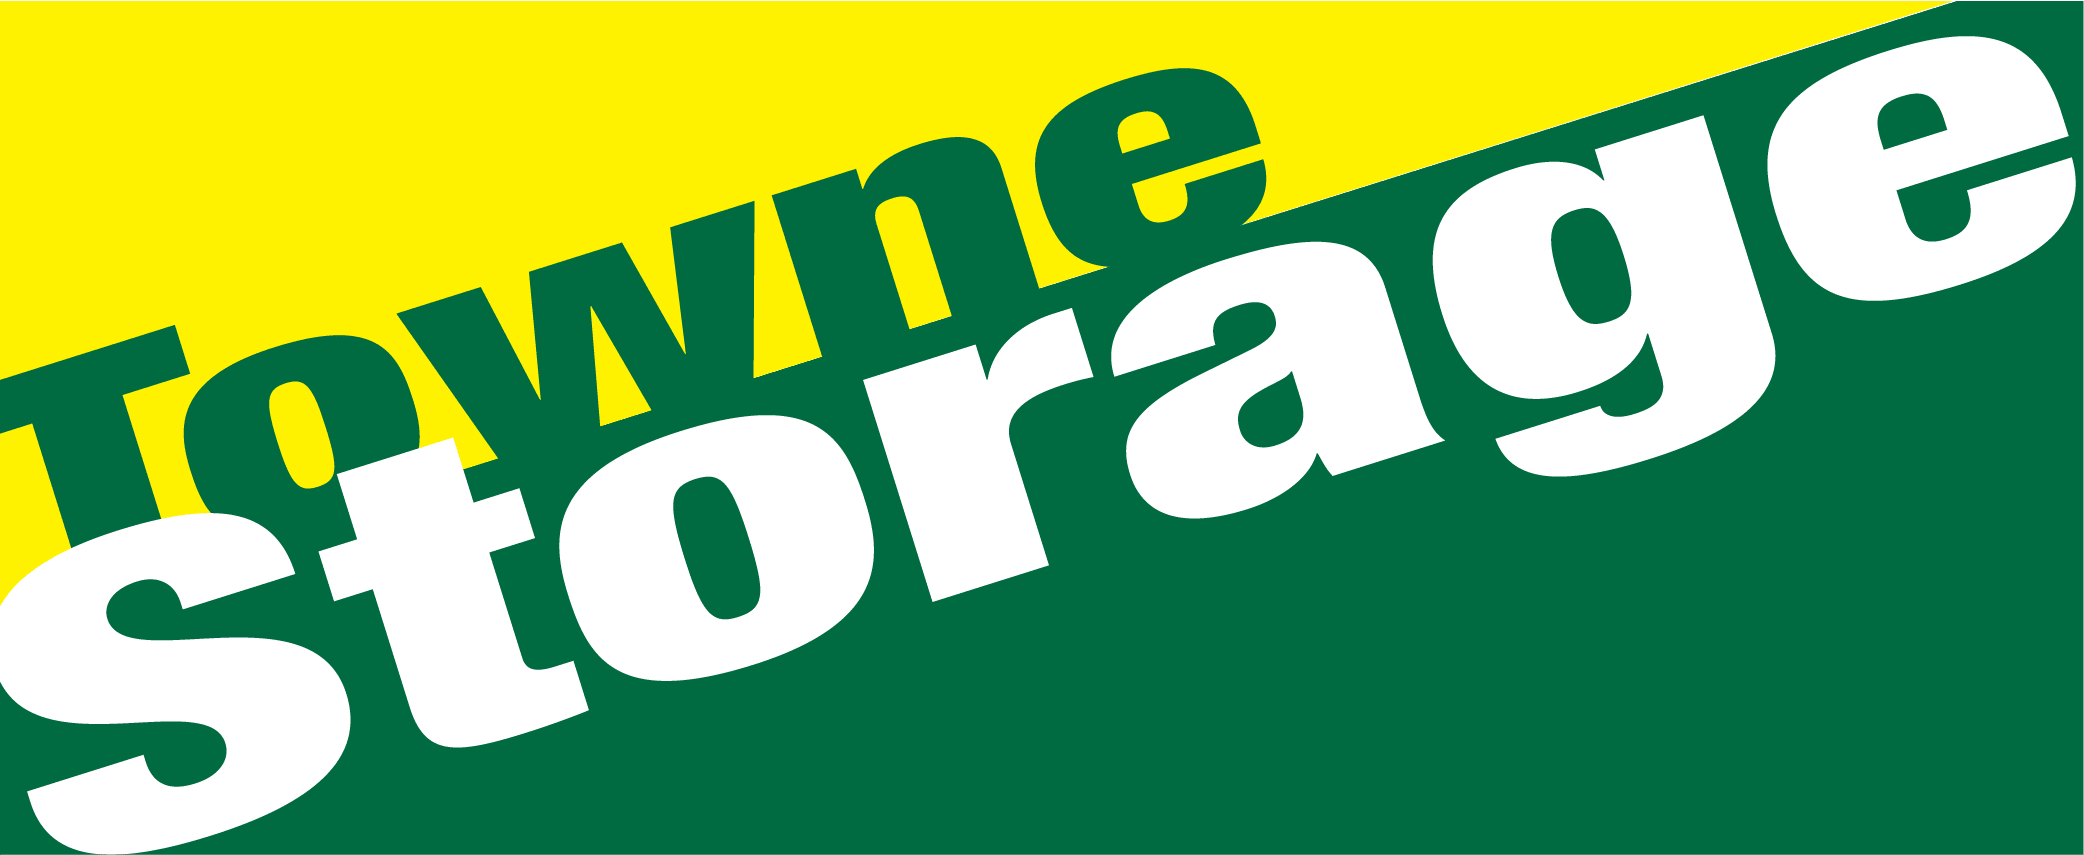 Towne Storage - University logo